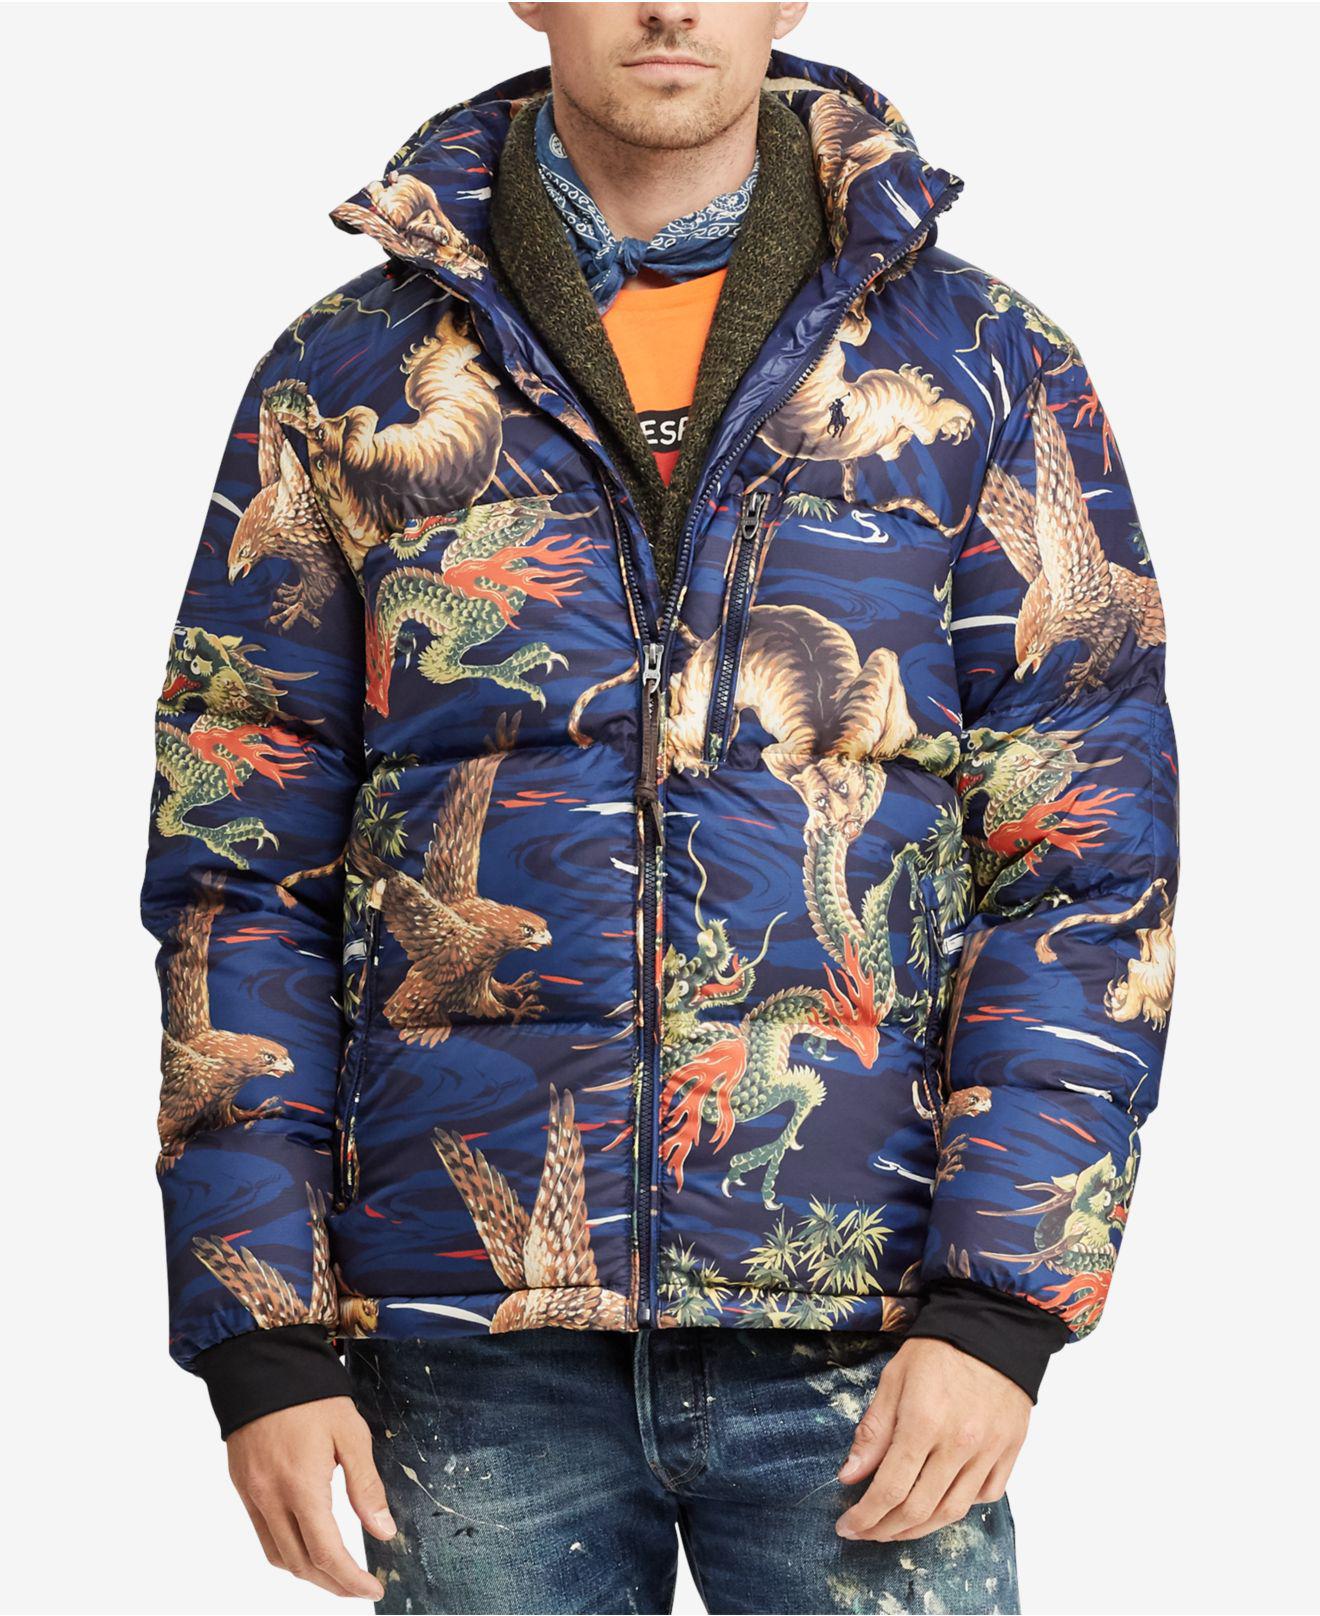 Polo Ralph Lauren Fleece Go Tiger Print Down Jacket in Blue for Men - Lyst